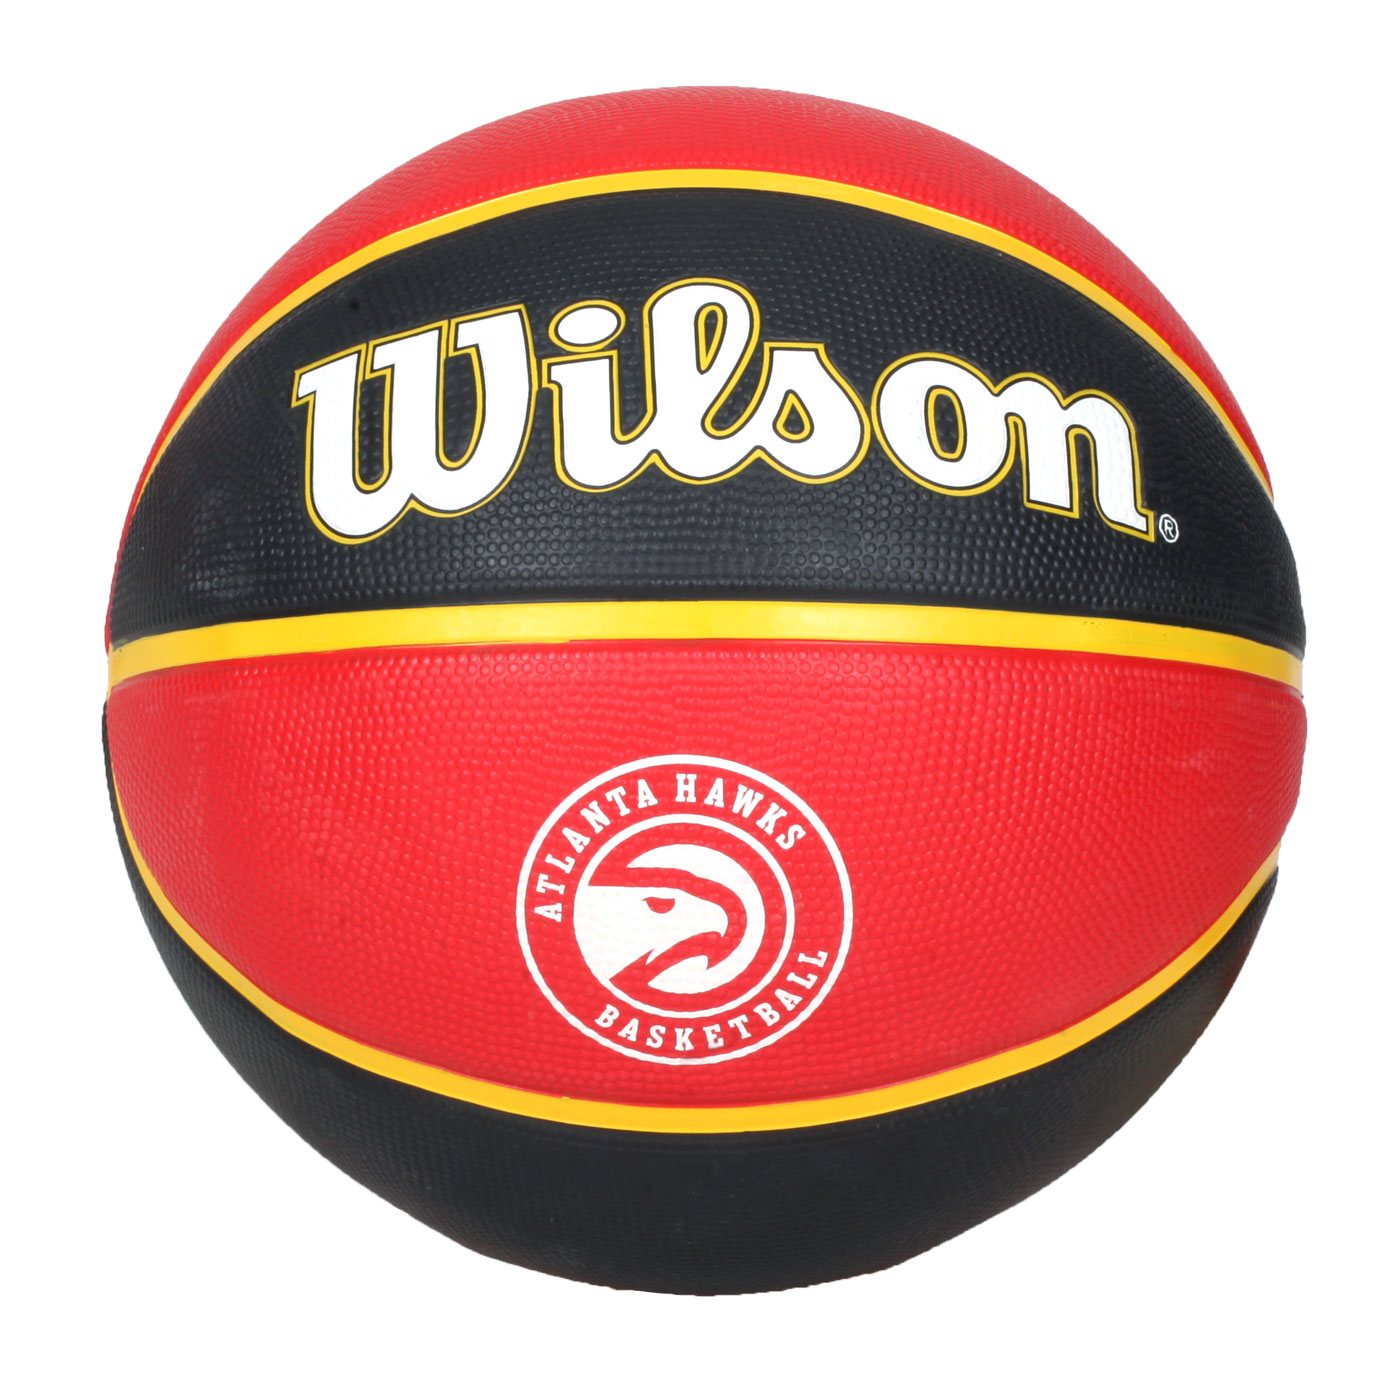 WILSON NBA隊徽系列21' 老鷹隊橡膠籃球#7 WTB1300XBATL - 黑紅黃白